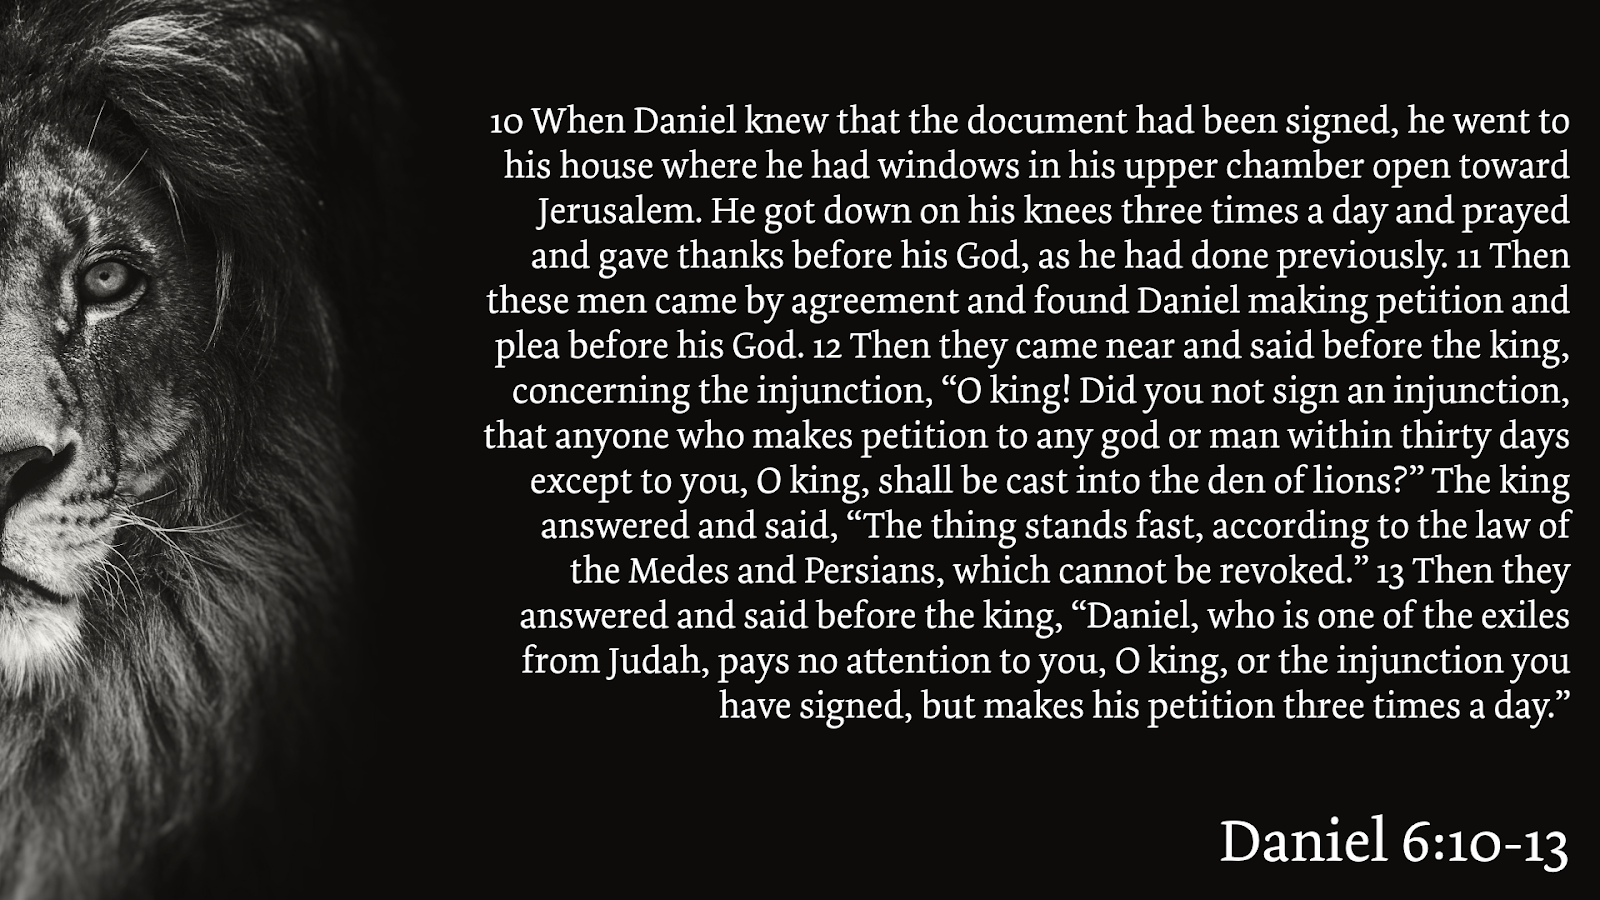 Daniel's Stand for God: Daniel Study (Part 6)